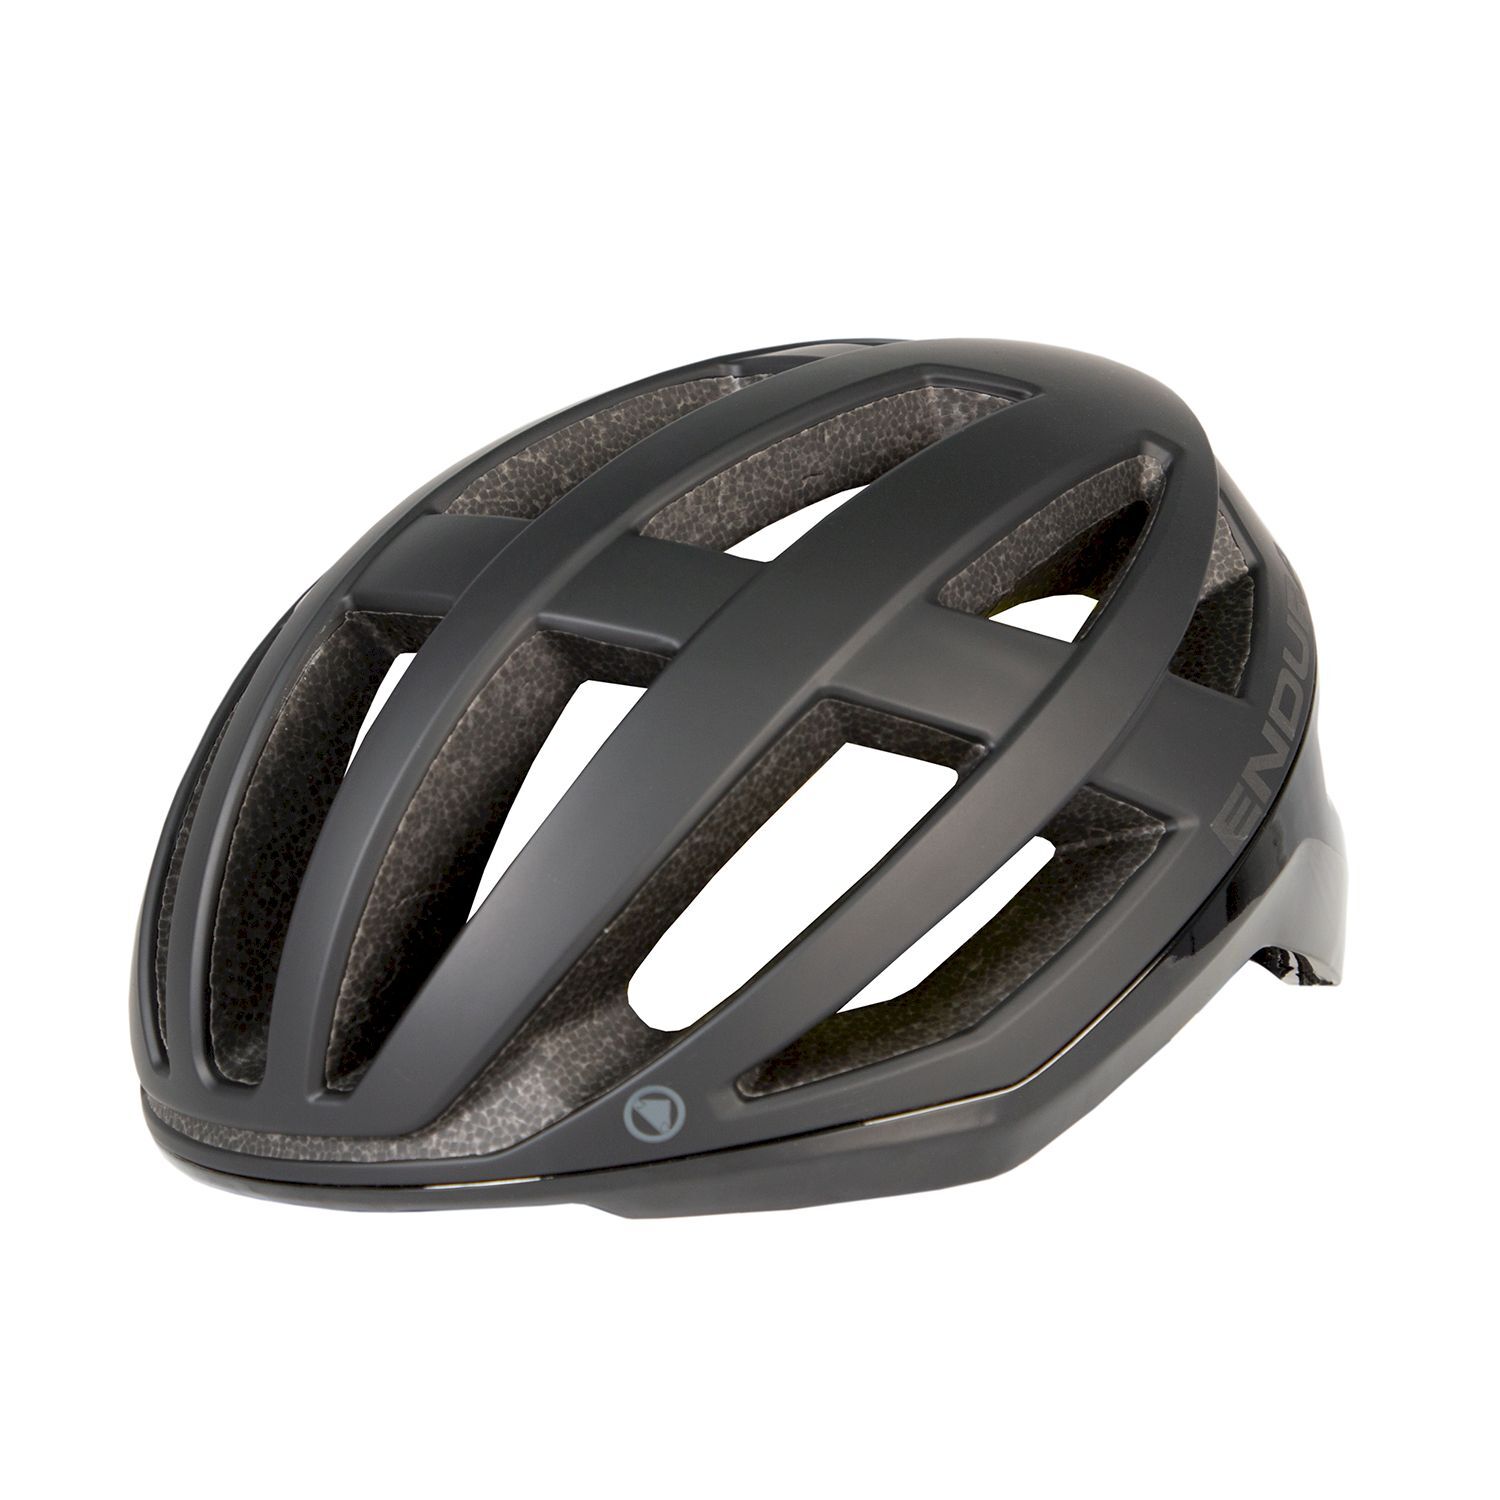 FS260-Pro Helmet II - Casco bici da corsa - Uomo